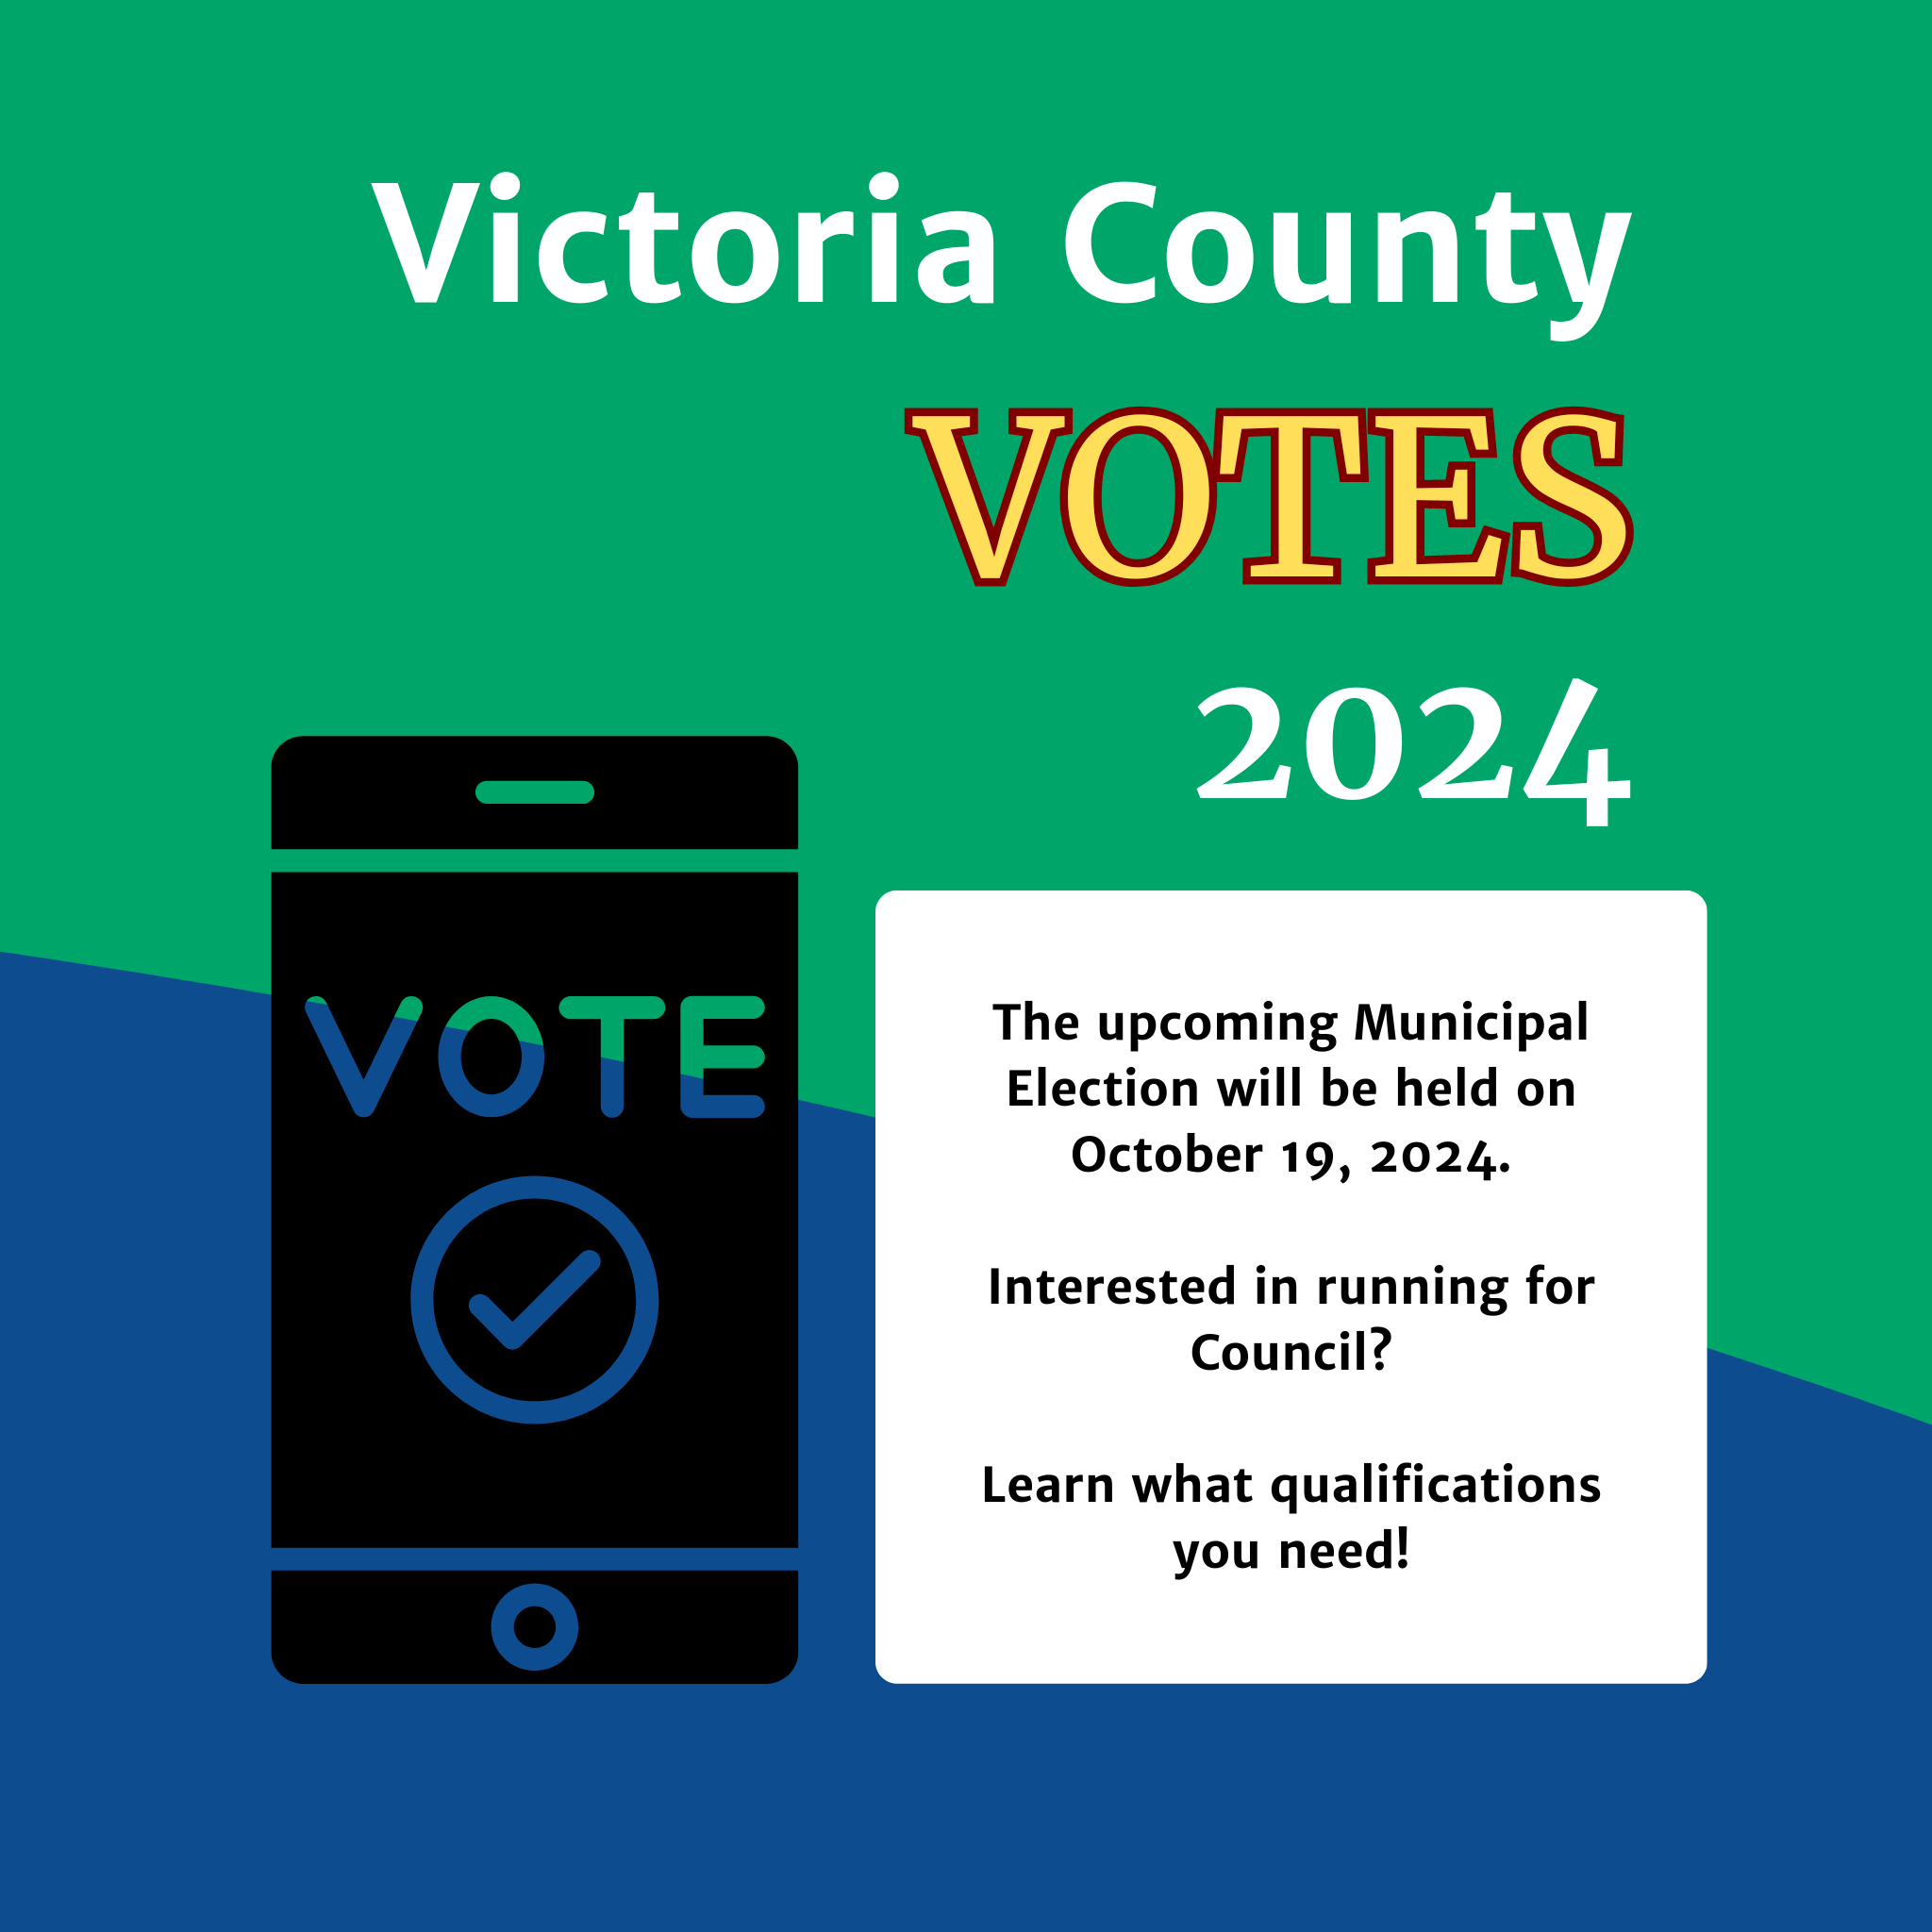 Victoria County Votes 2024